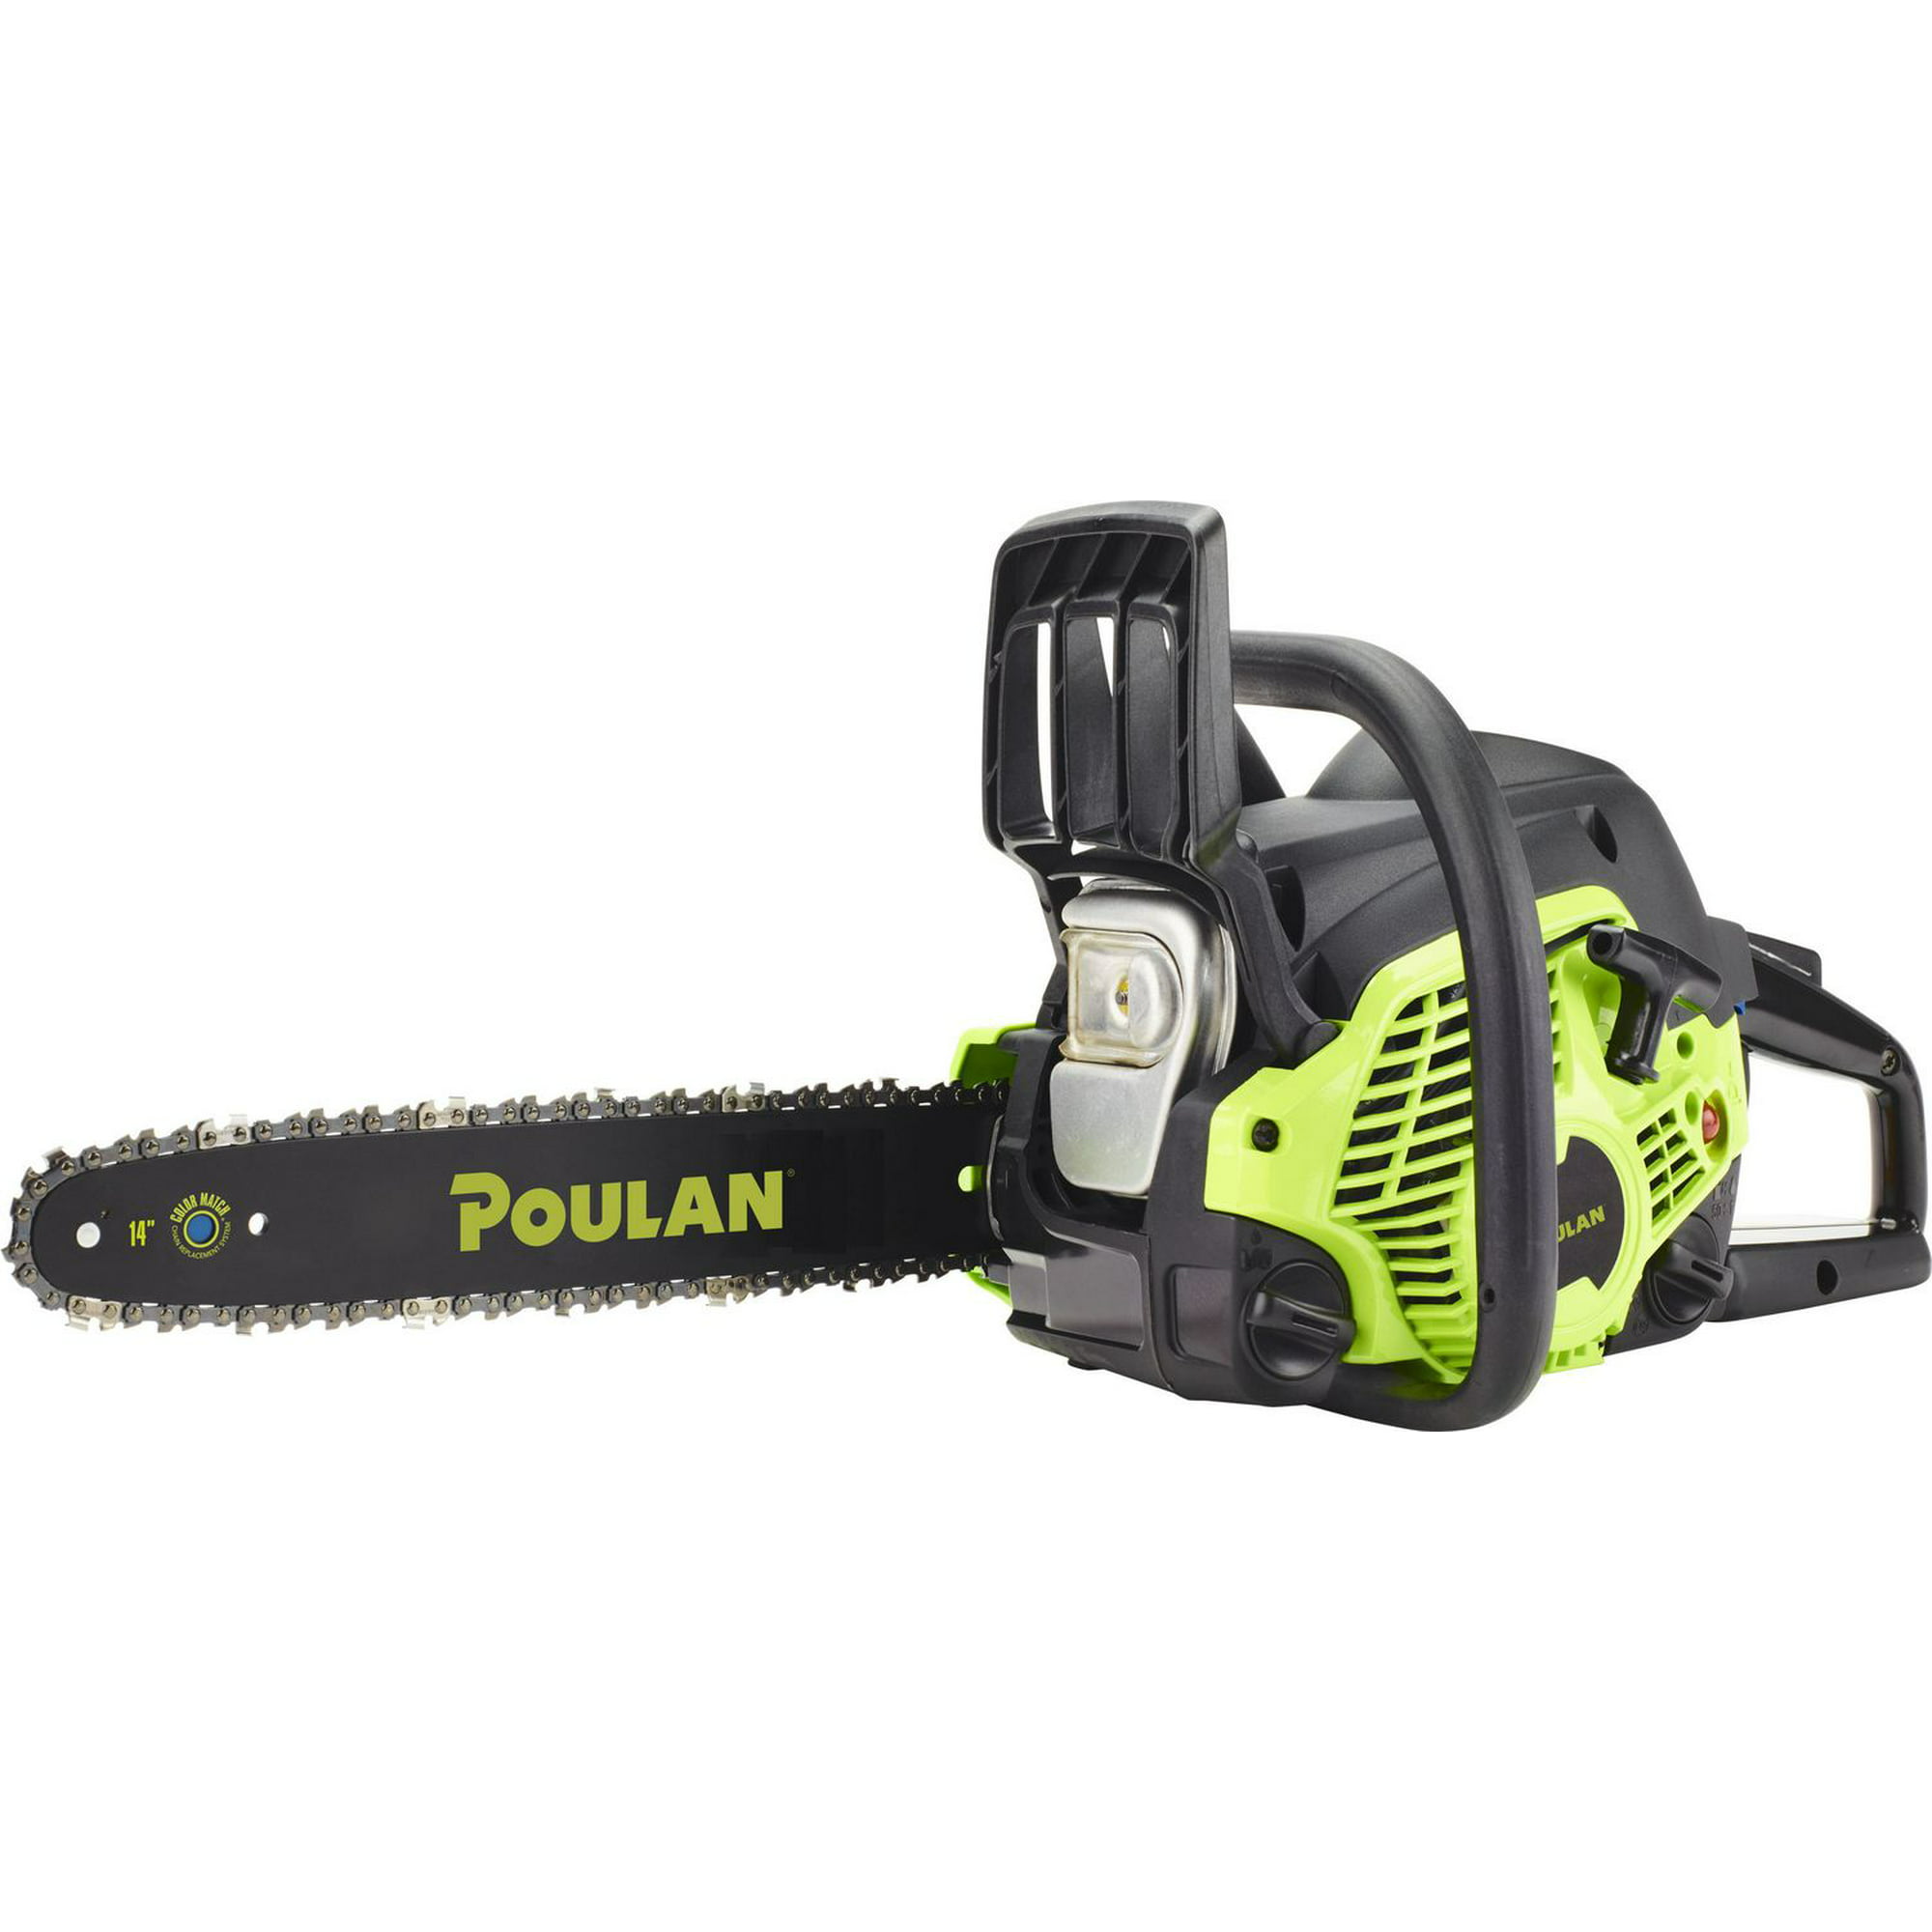 Poulan 33cc 14-inch Gas Chainsaw, PL3314 